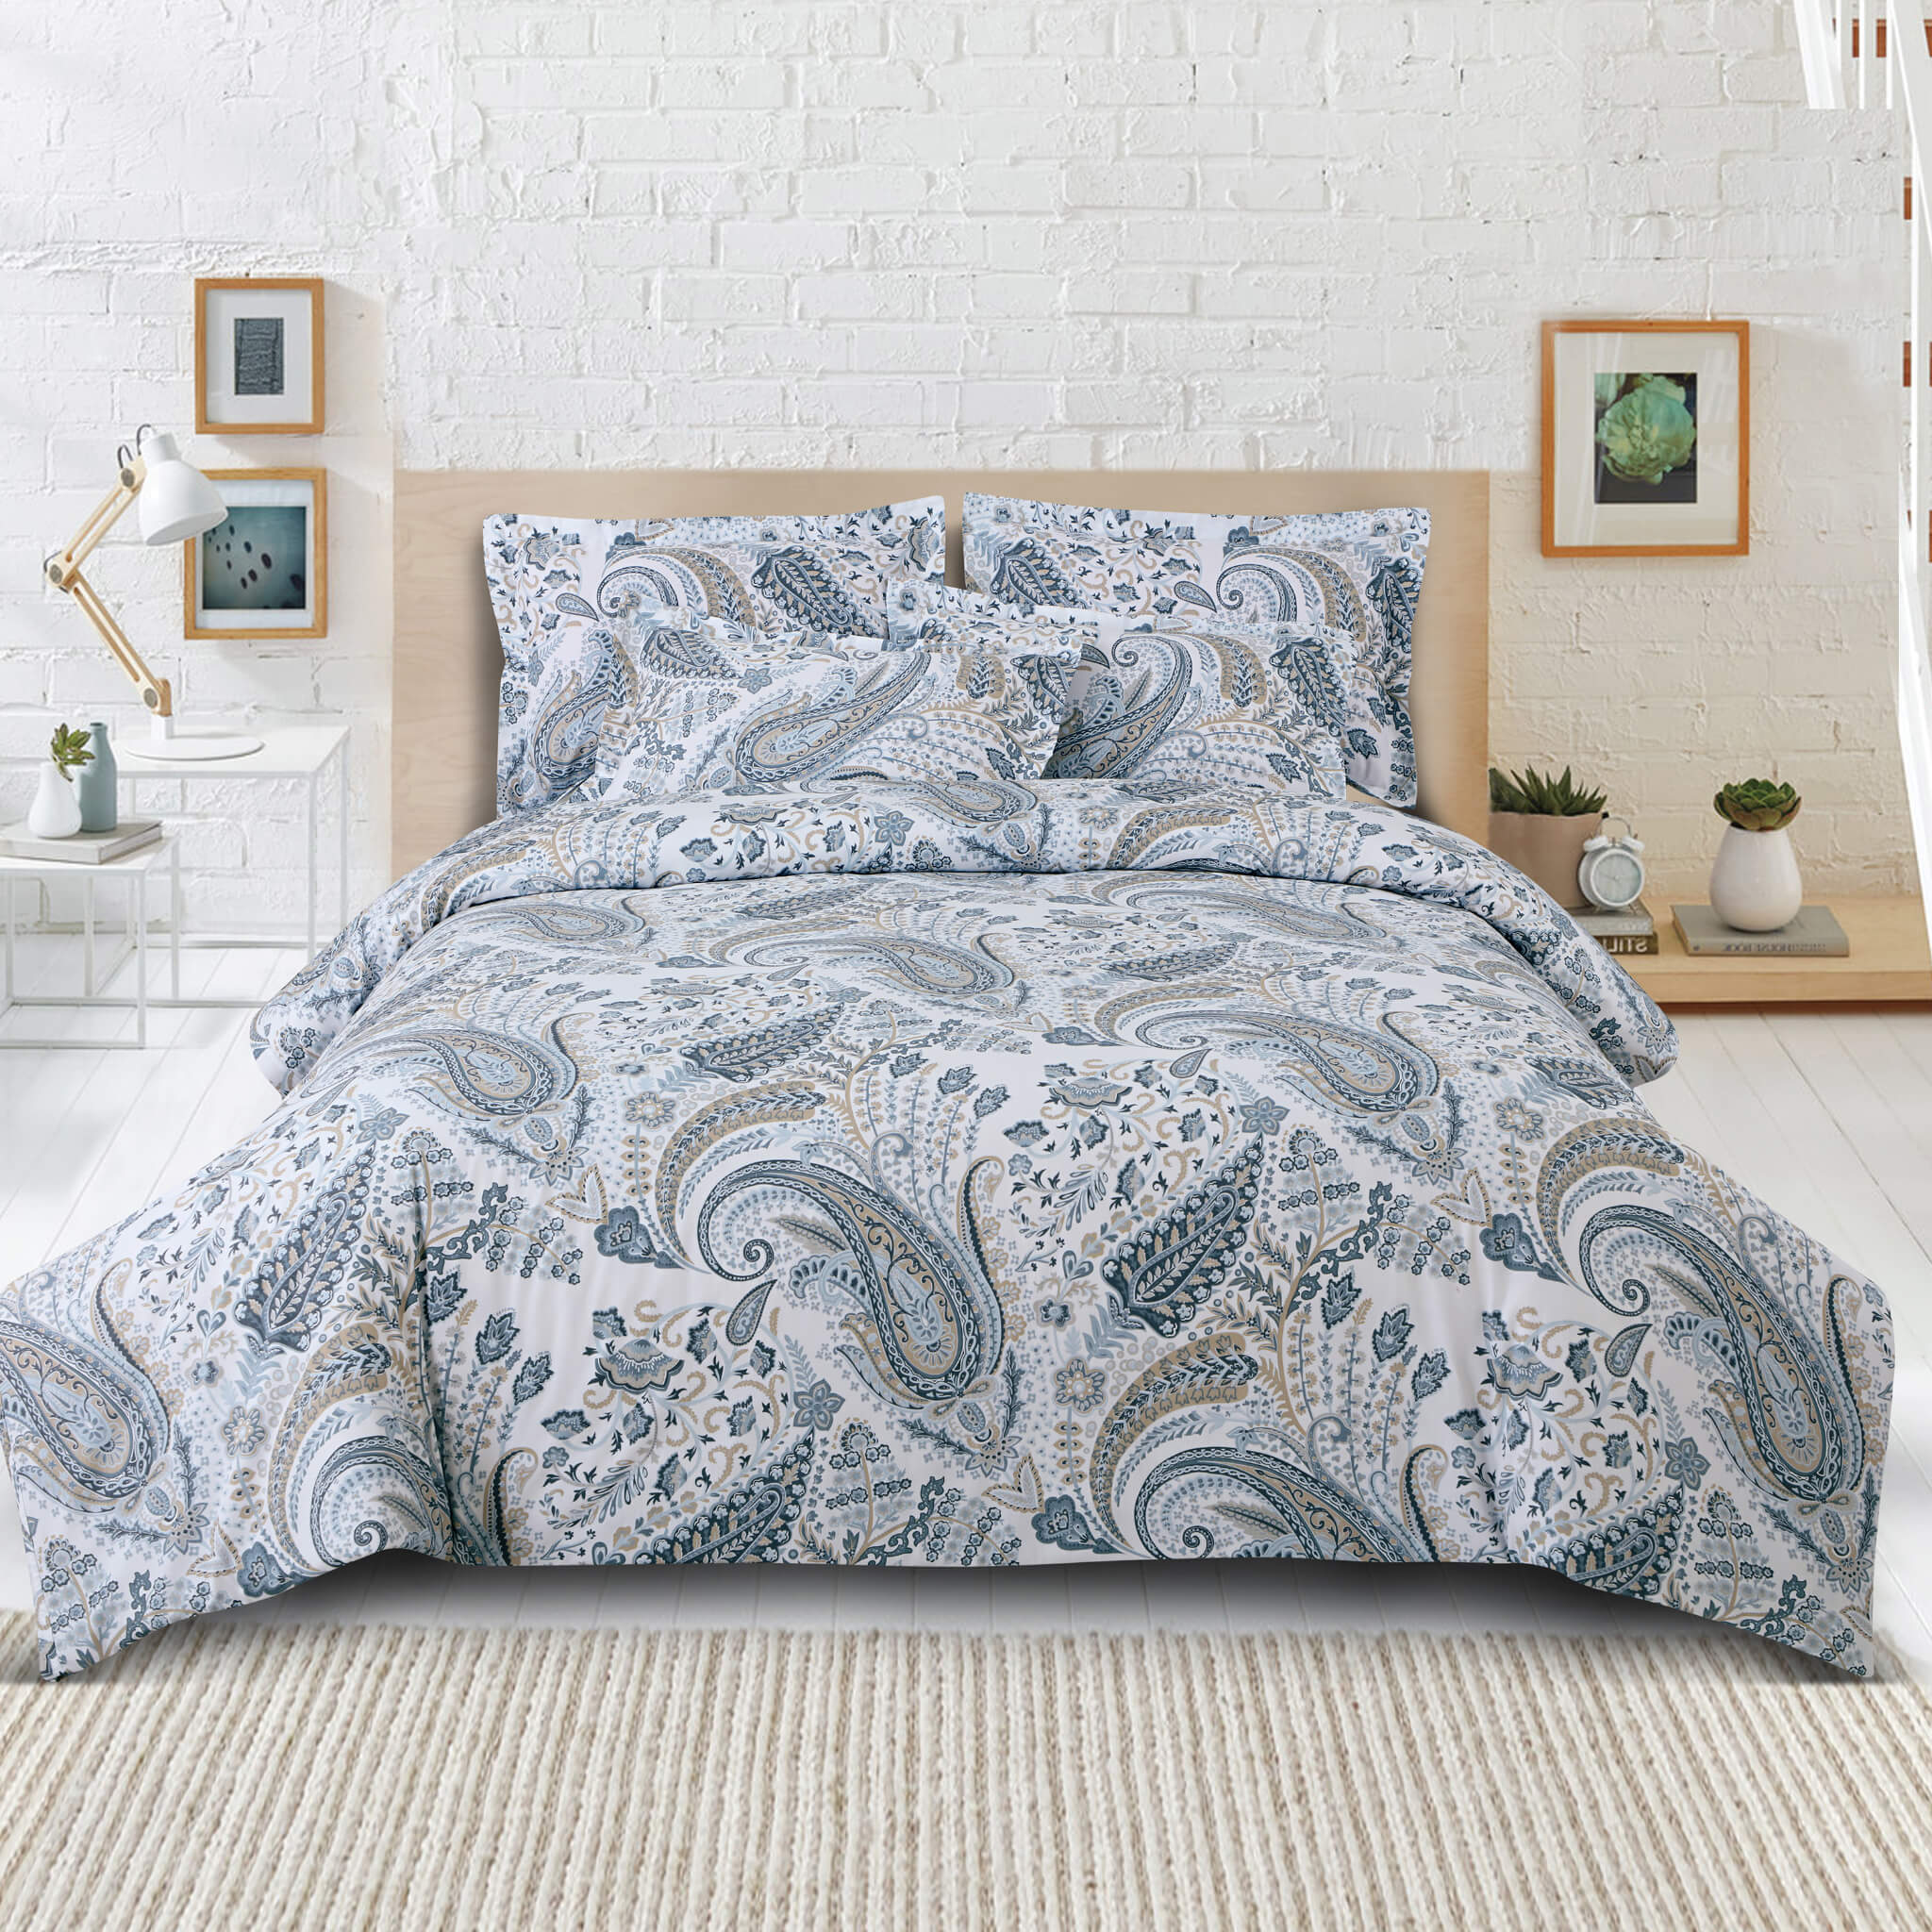 Malako Royale XL White Paisley 100% Cotton King Size Bed Sheet/Bedding Set